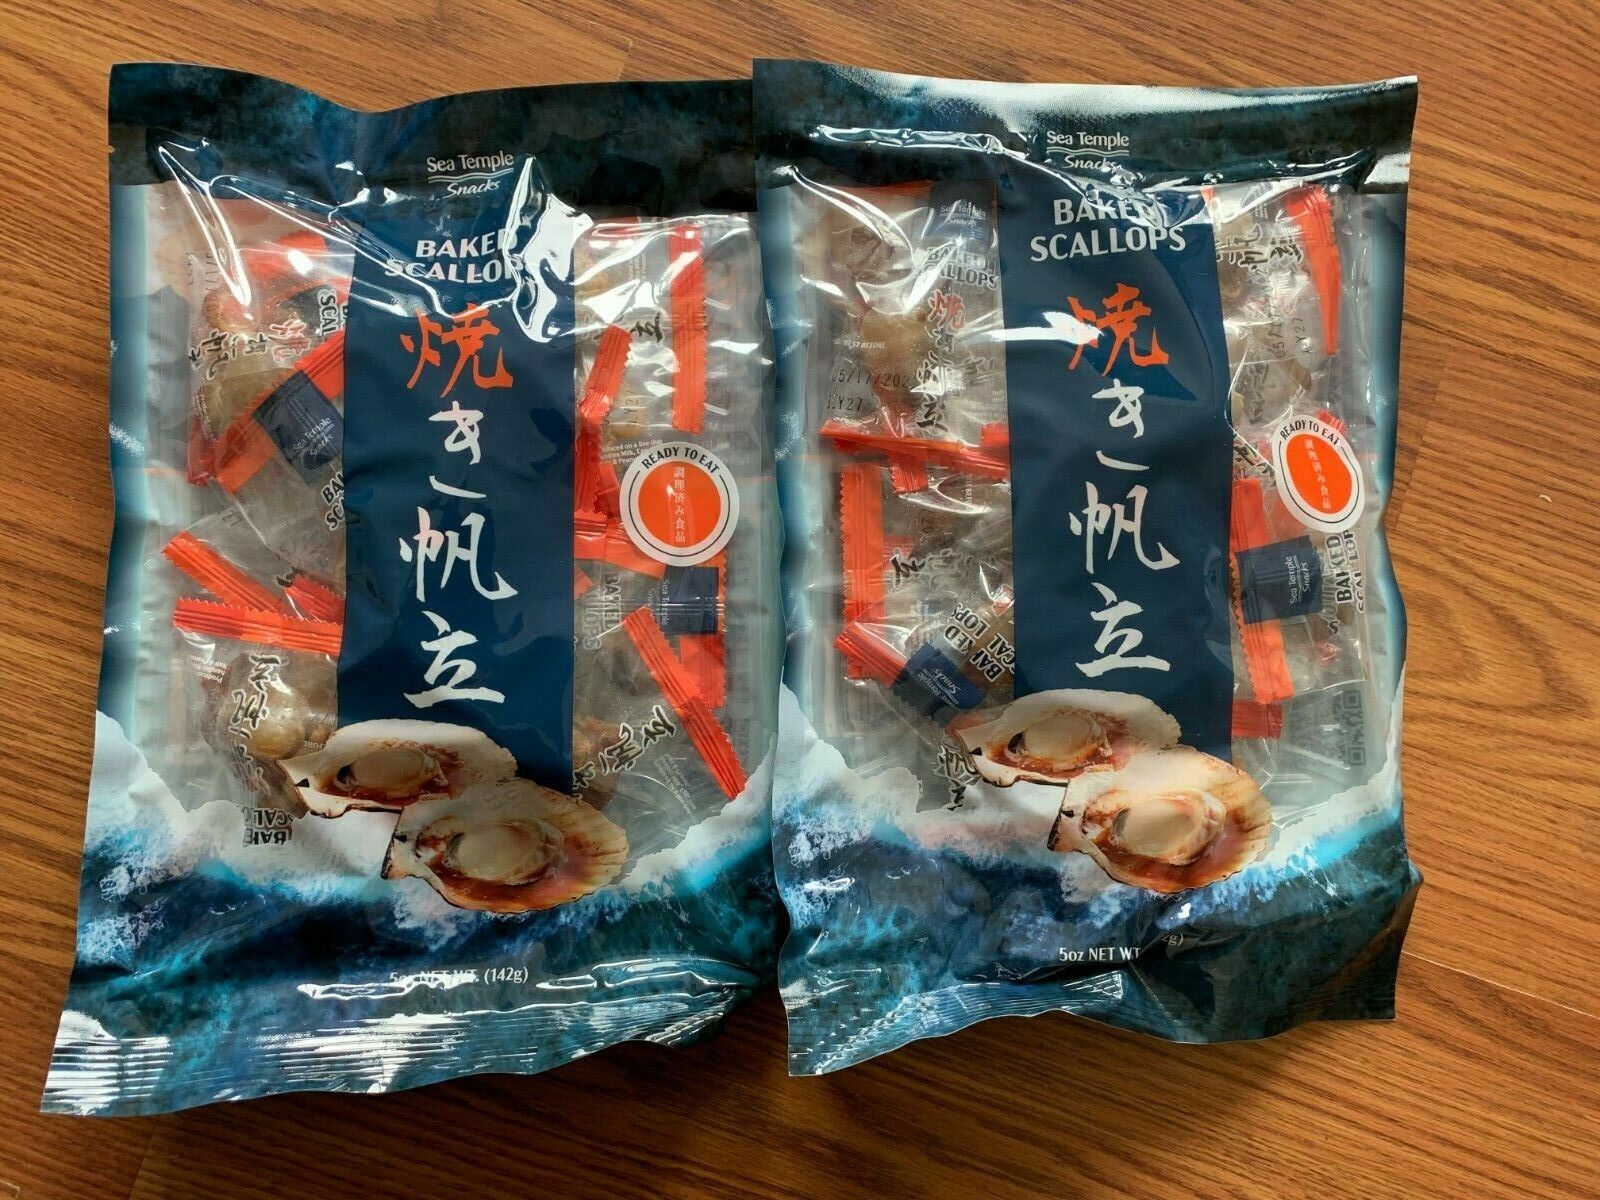 Sea Temple Snacks Baked Scallops 5 oz ea ( 2 bags) Product of Japan